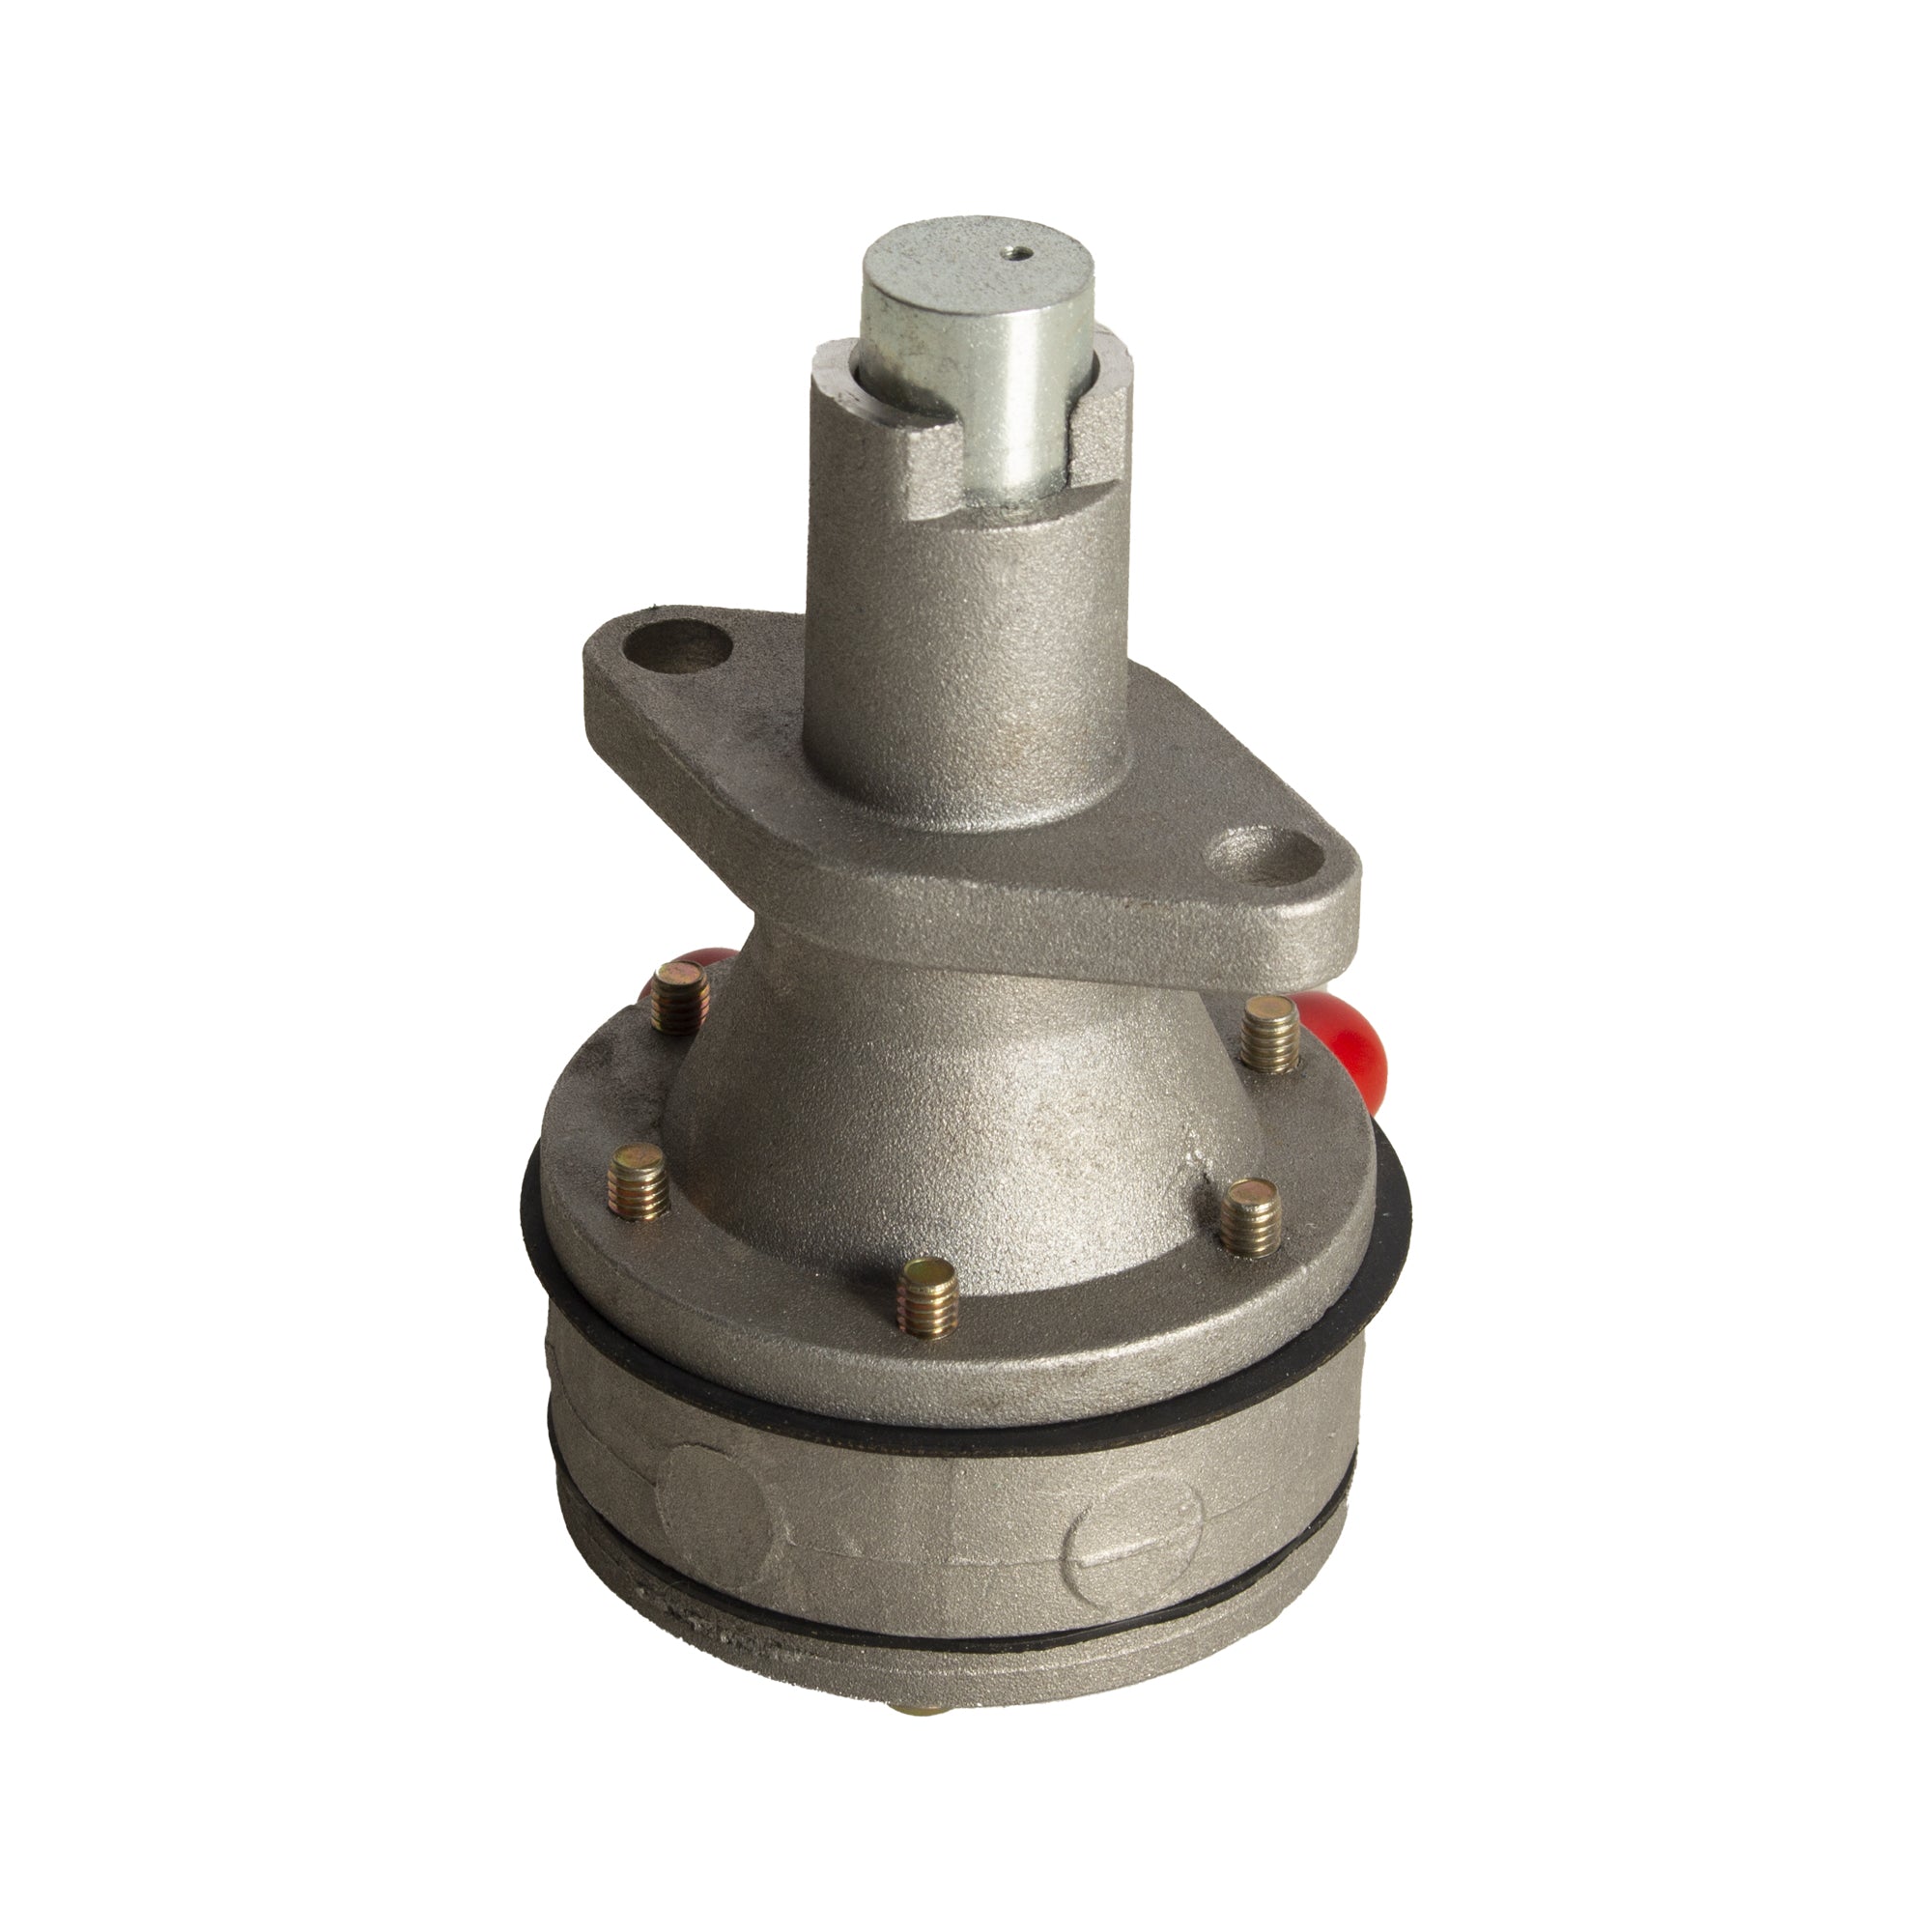 Fuel Pump Replacement for KUBOTA D950-B C1902-B DF44-7